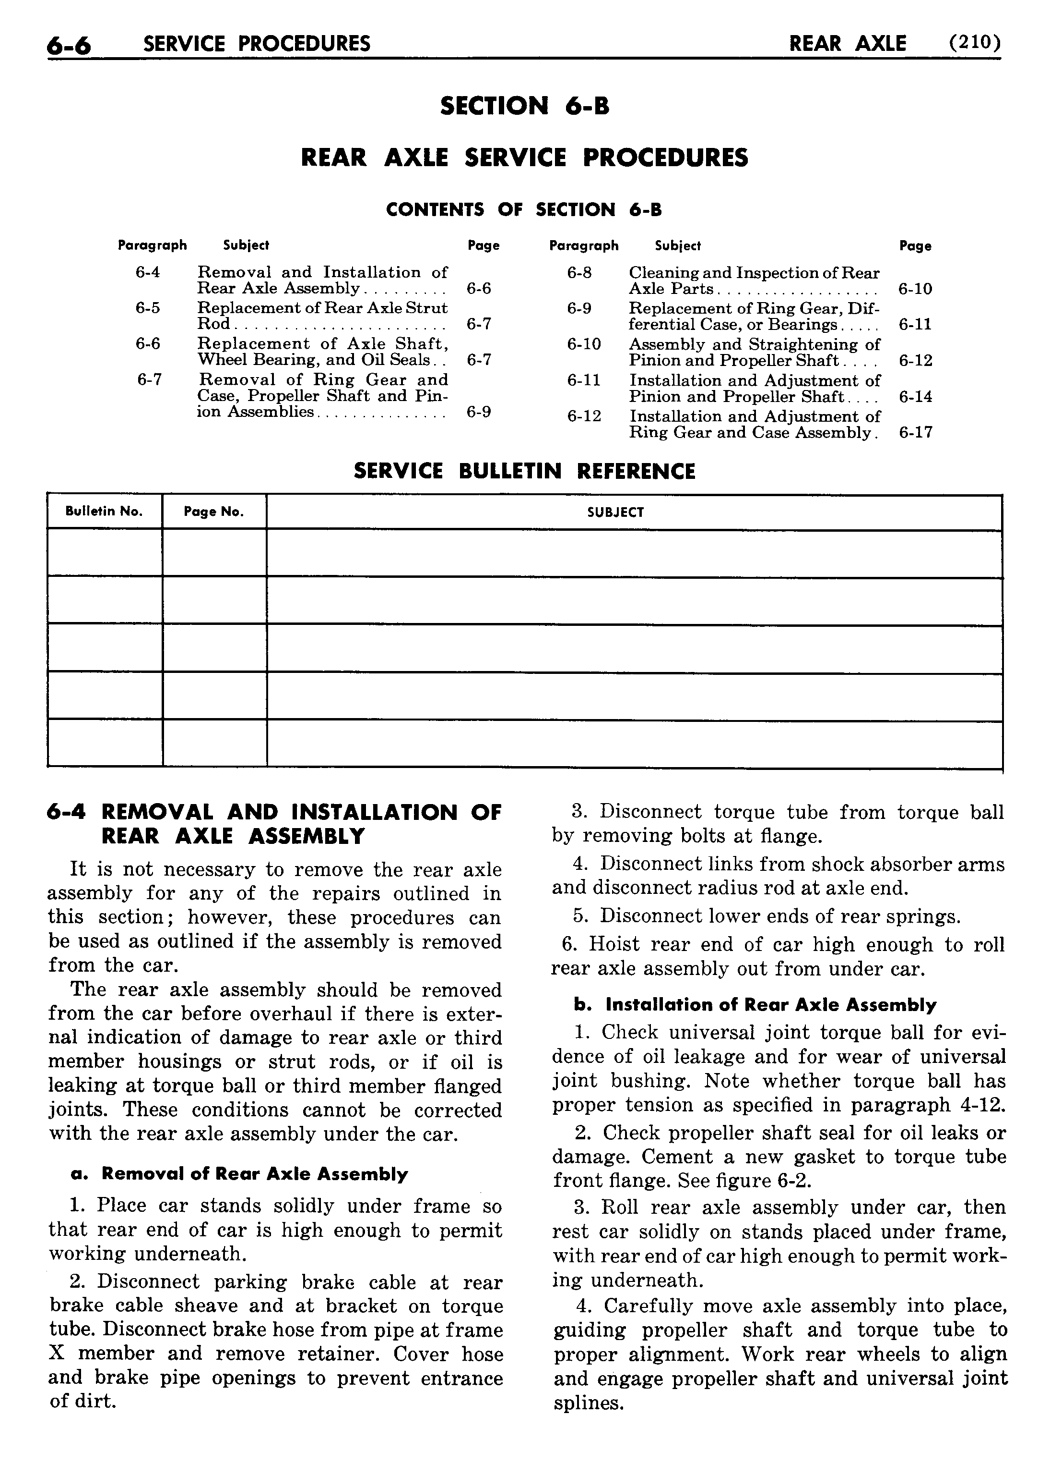 n_07 1955 Buick Shop Manual - Rear Axle-006-006.jpg